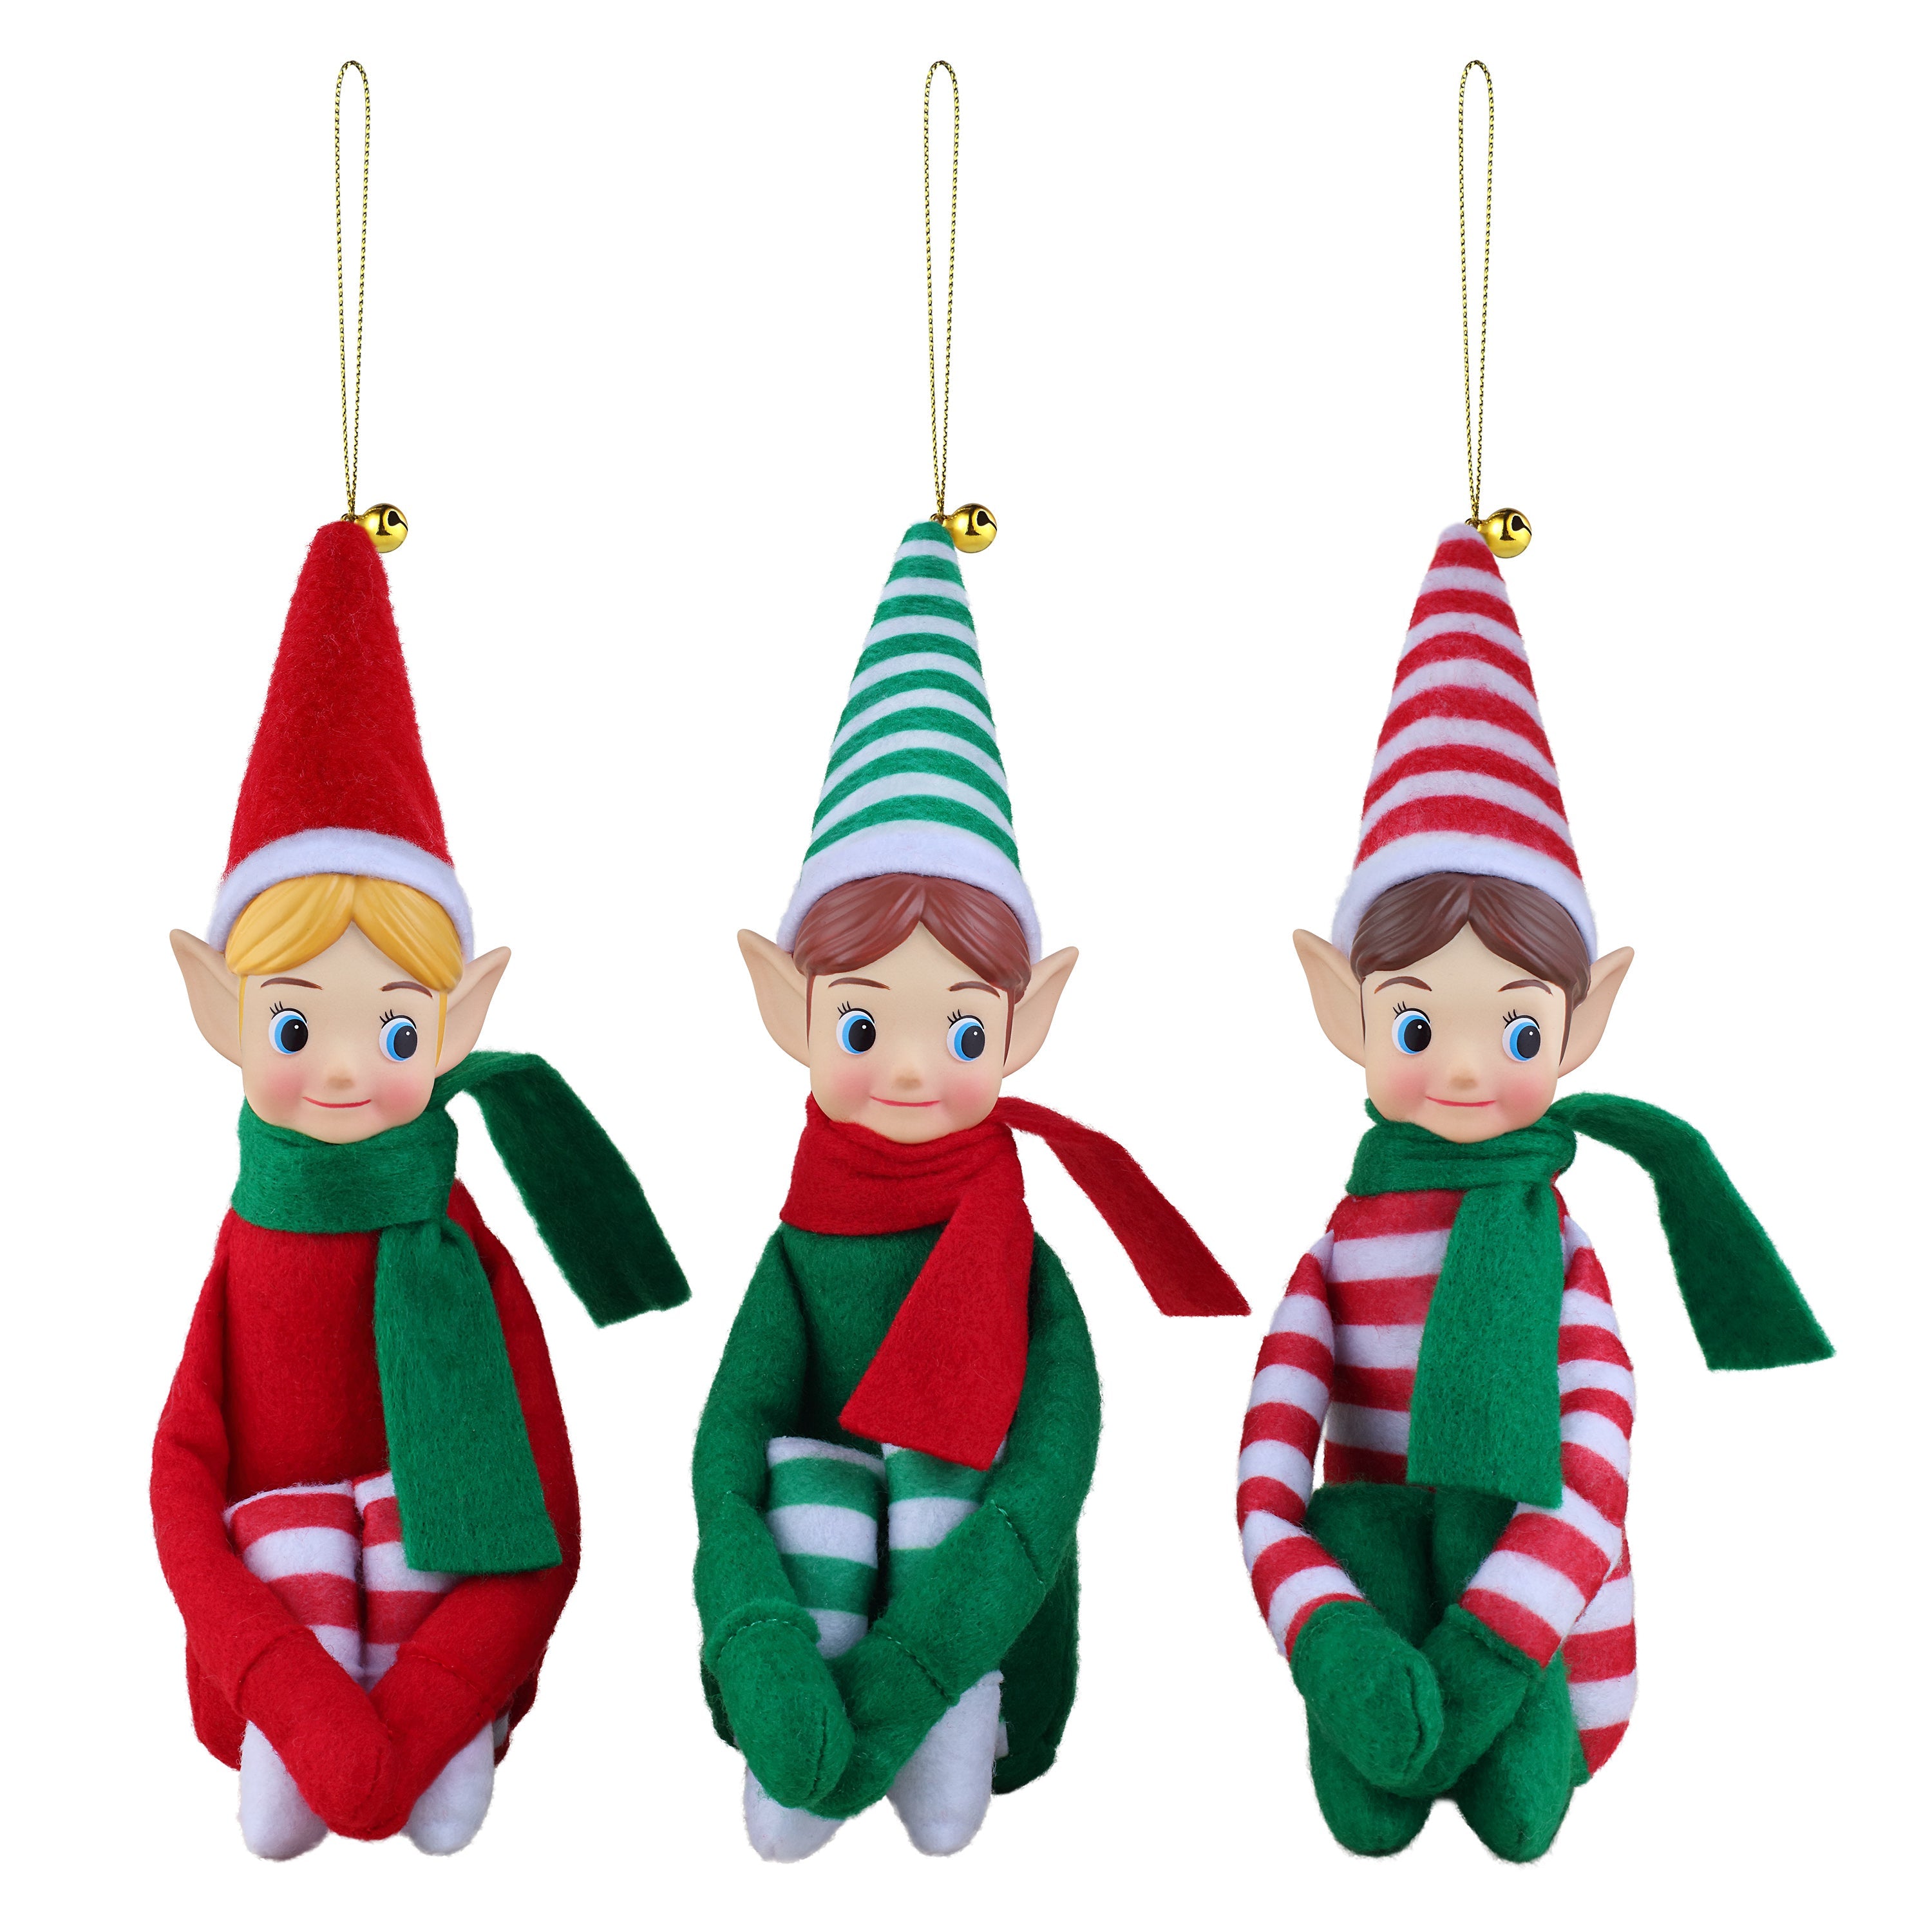  Christmas Elf Christmas Ornament Storage Box Stores up